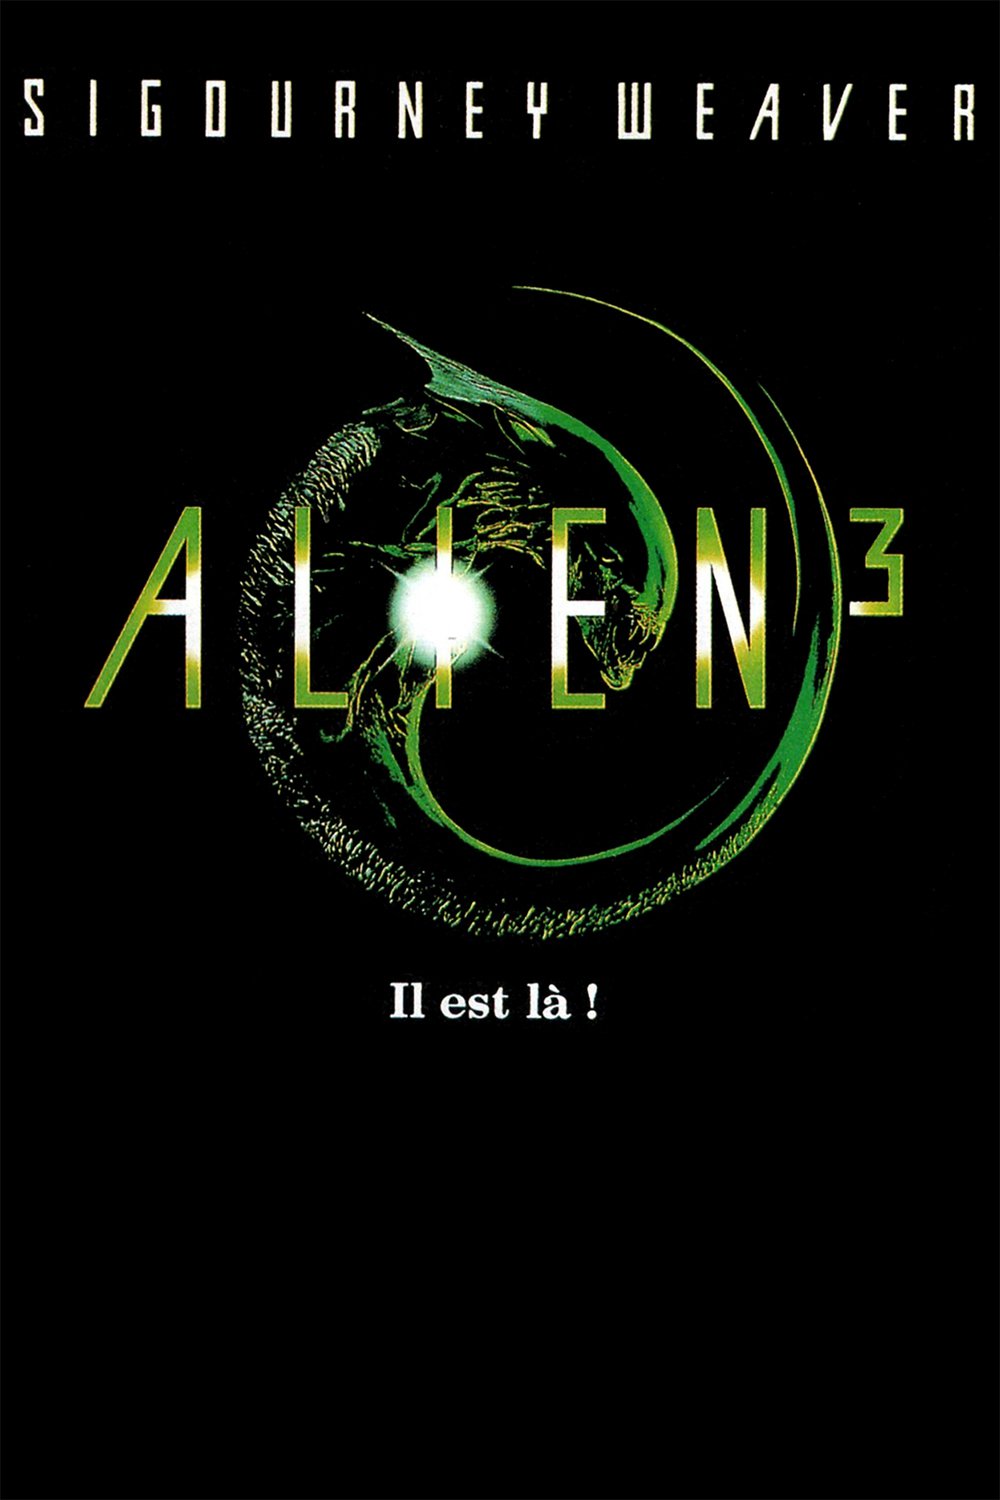 Affiche du film "Alien³"